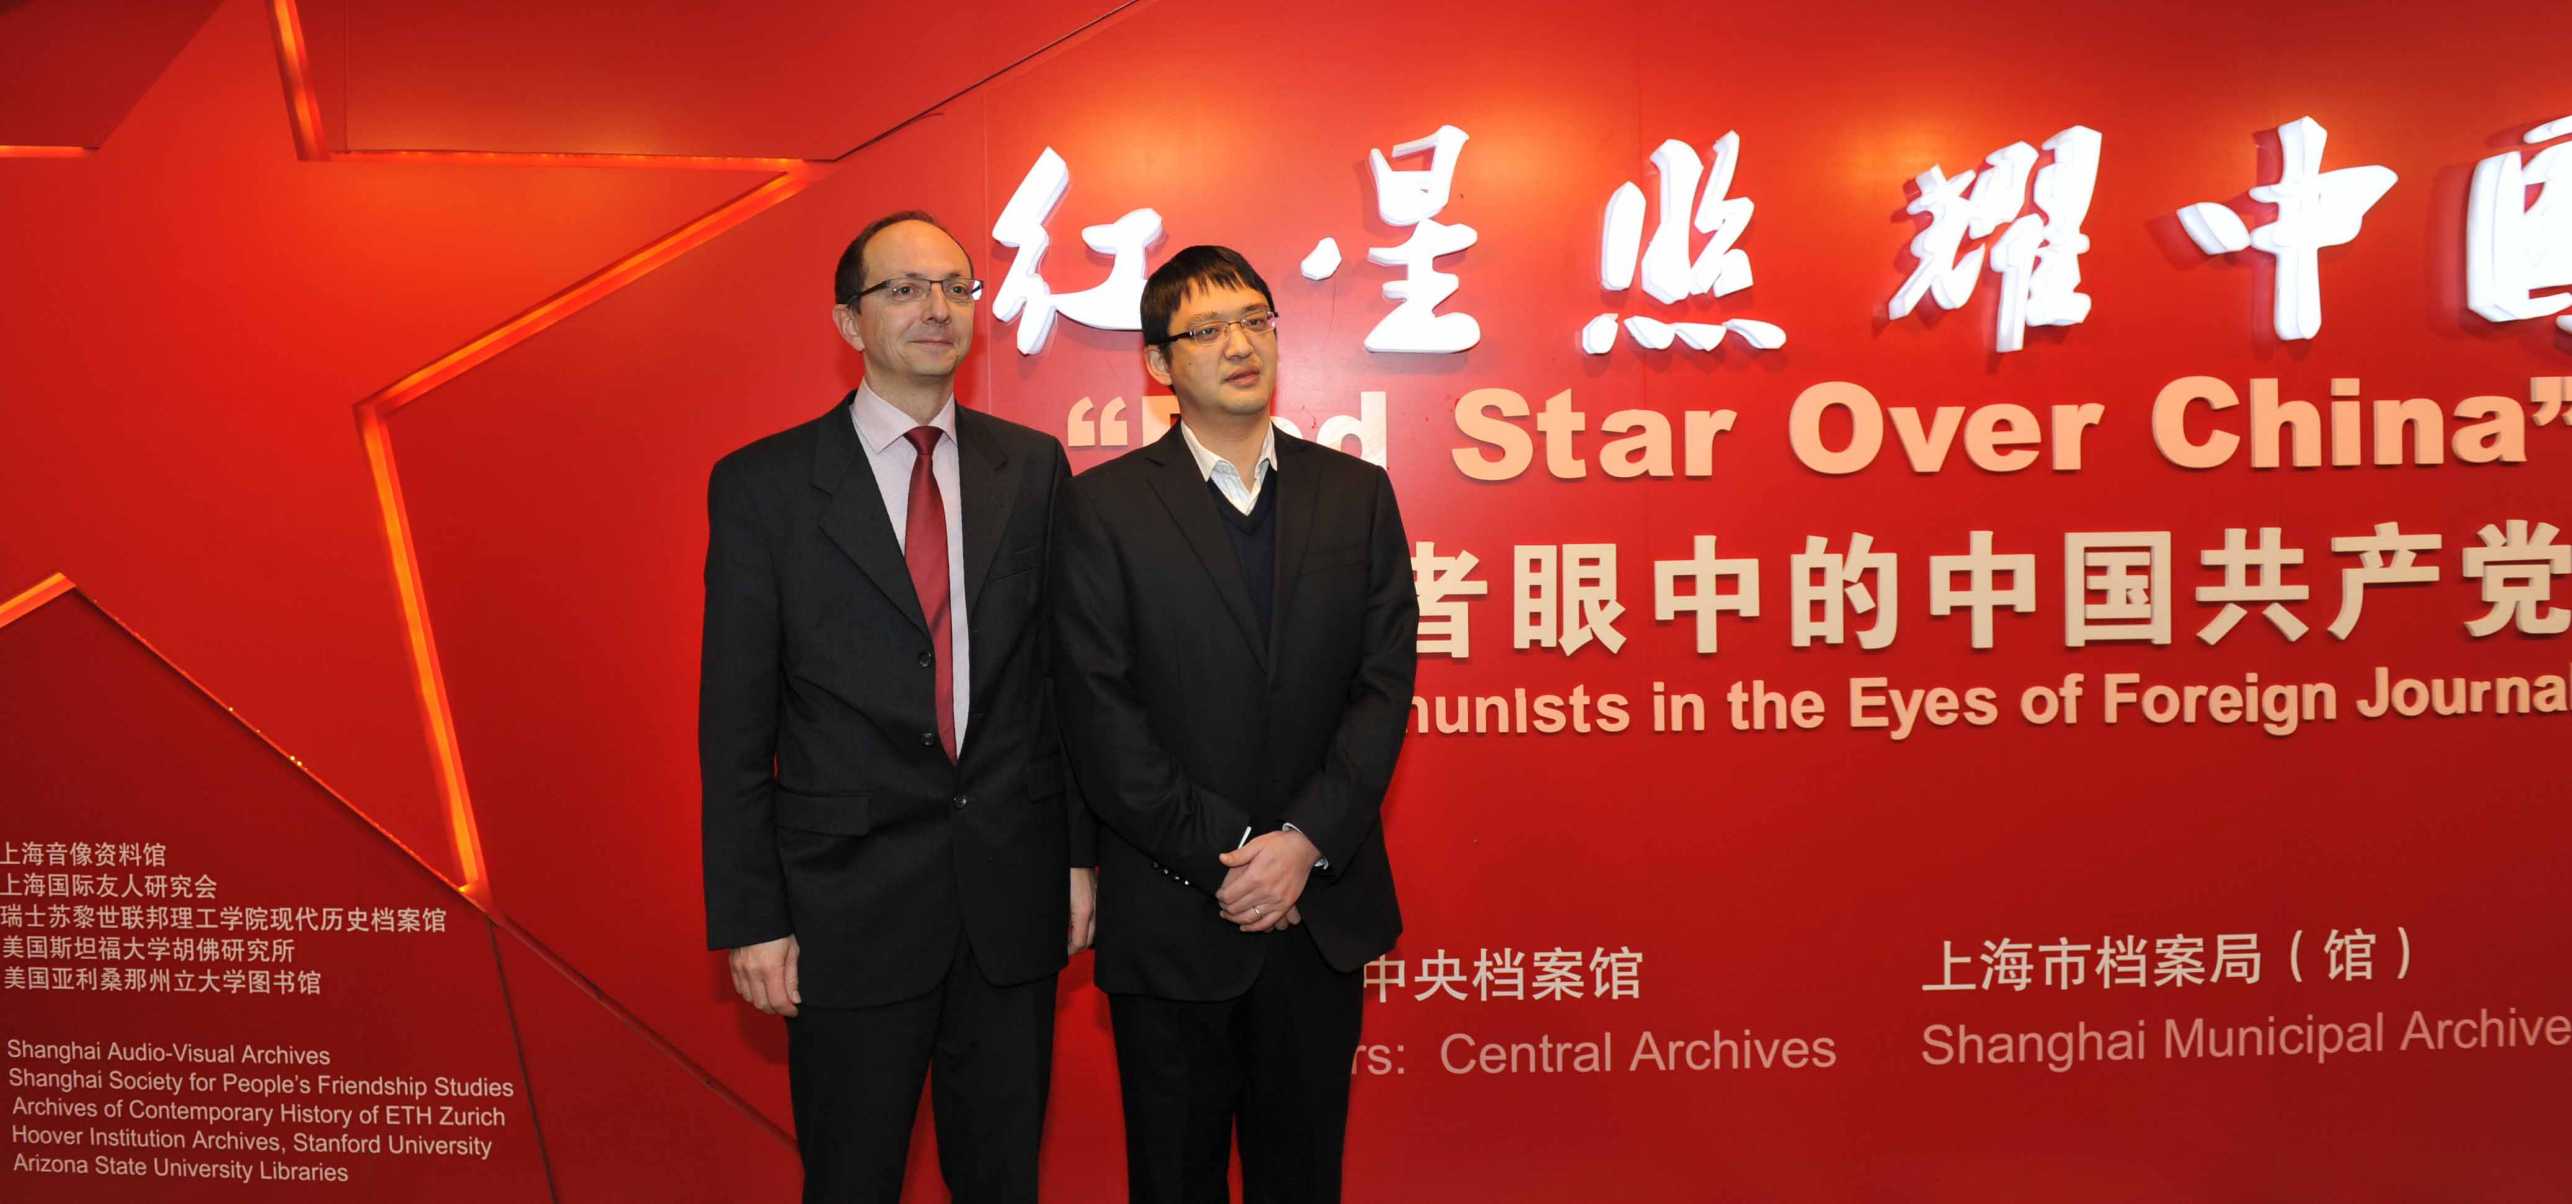 Ausstellung Red Star Over China in den Shanghai Municipal Archives